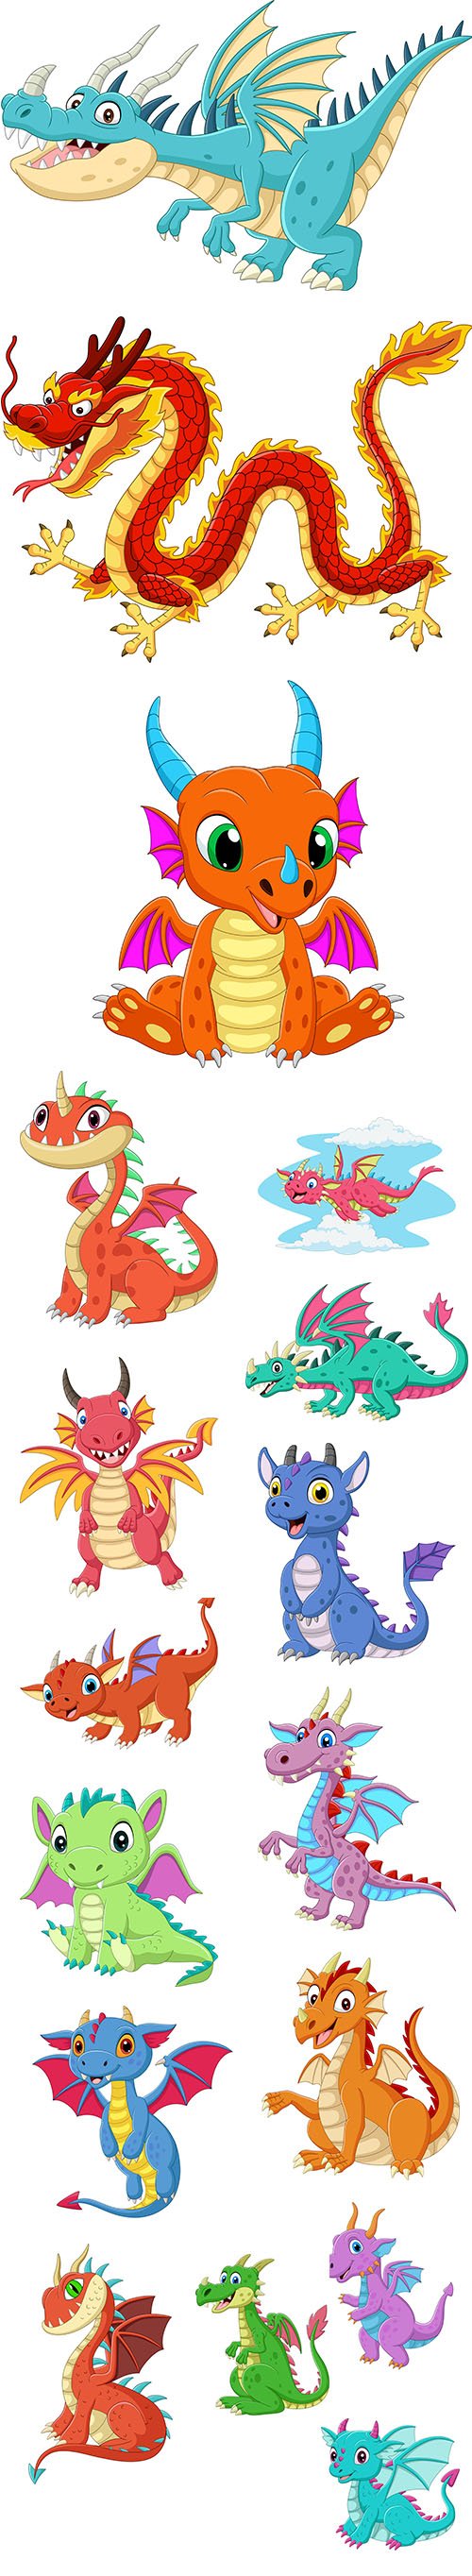 Cartoon Baby Dragon Set